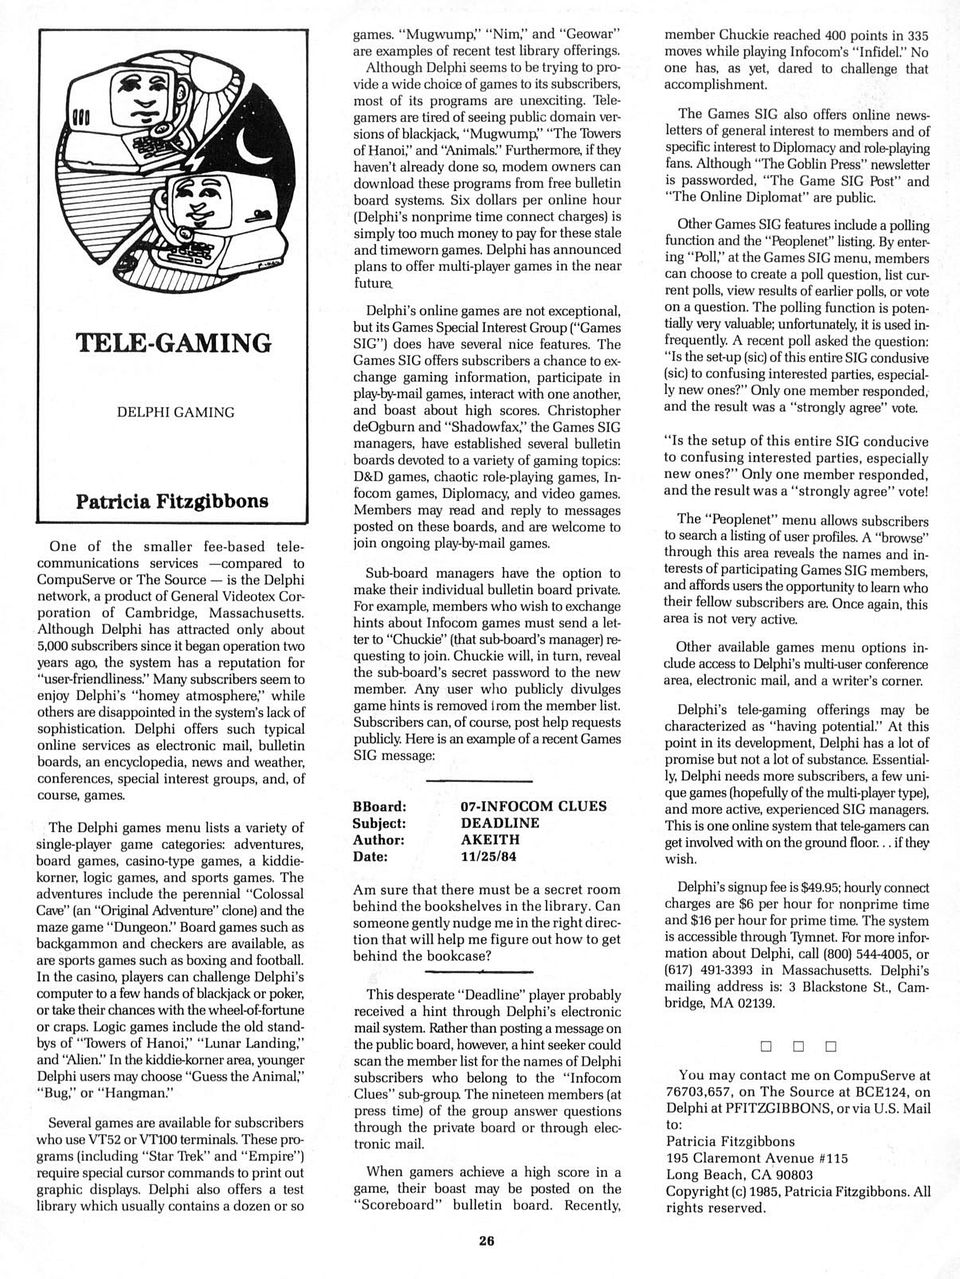 Tele-Gaming: Delphi Gaming